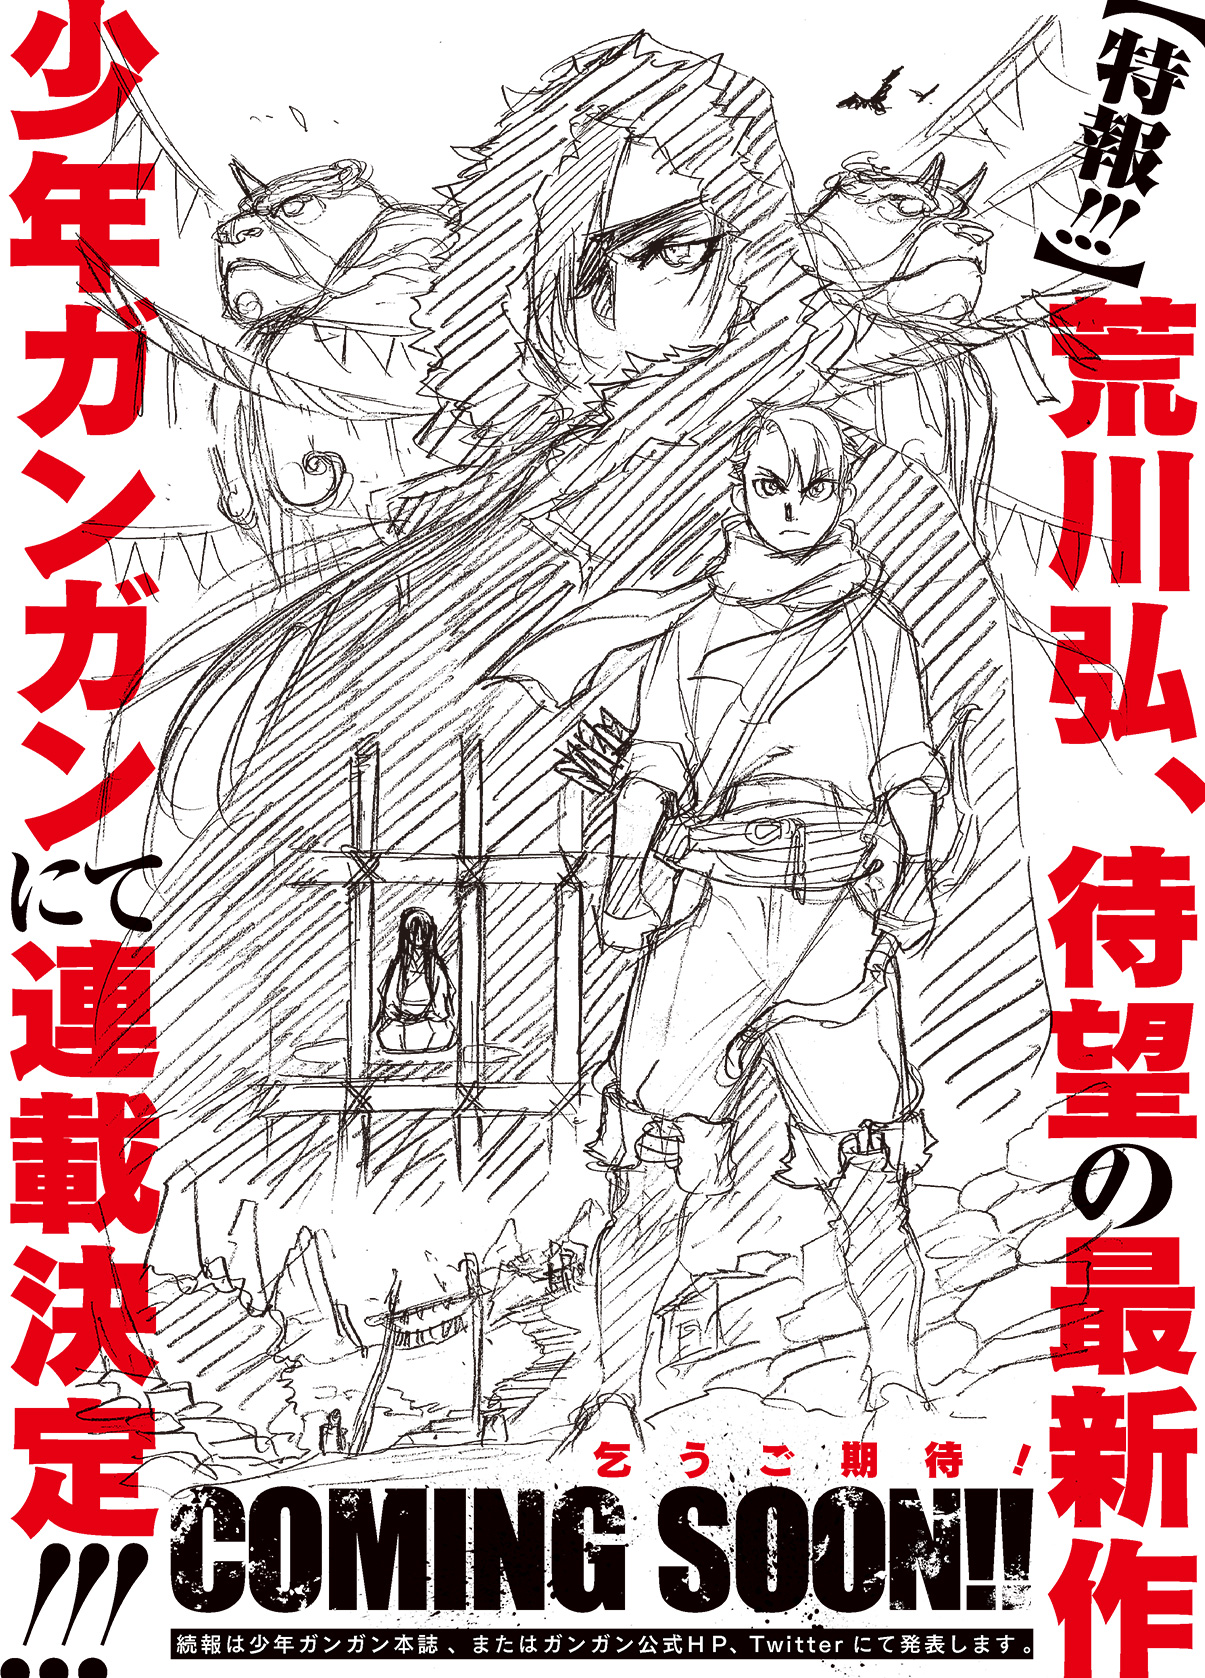 Fullmetal Alchemist author set to release new original manga series